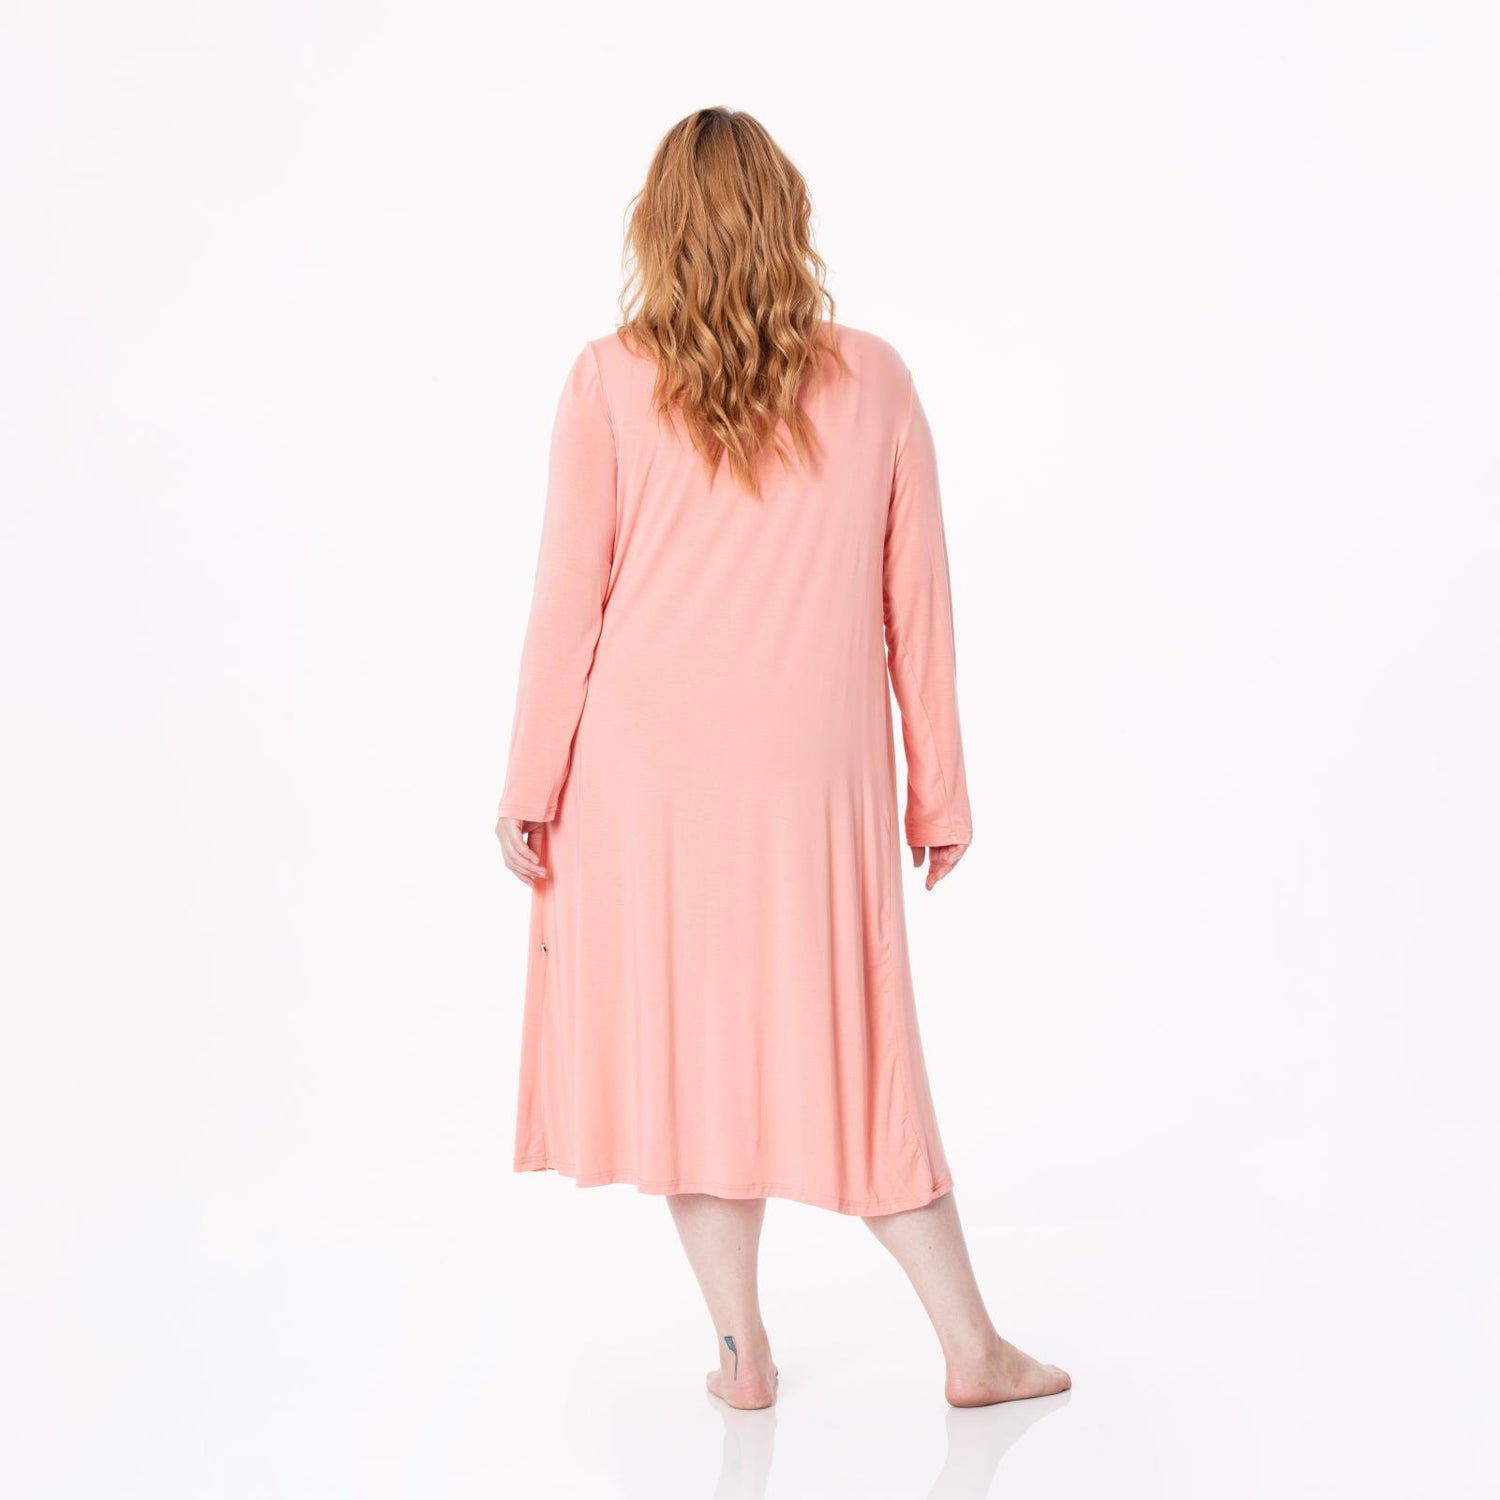 Women's Print Sleeping Bra, Tulip Shorts and Duster Robe Set in Fresh Air Peaches